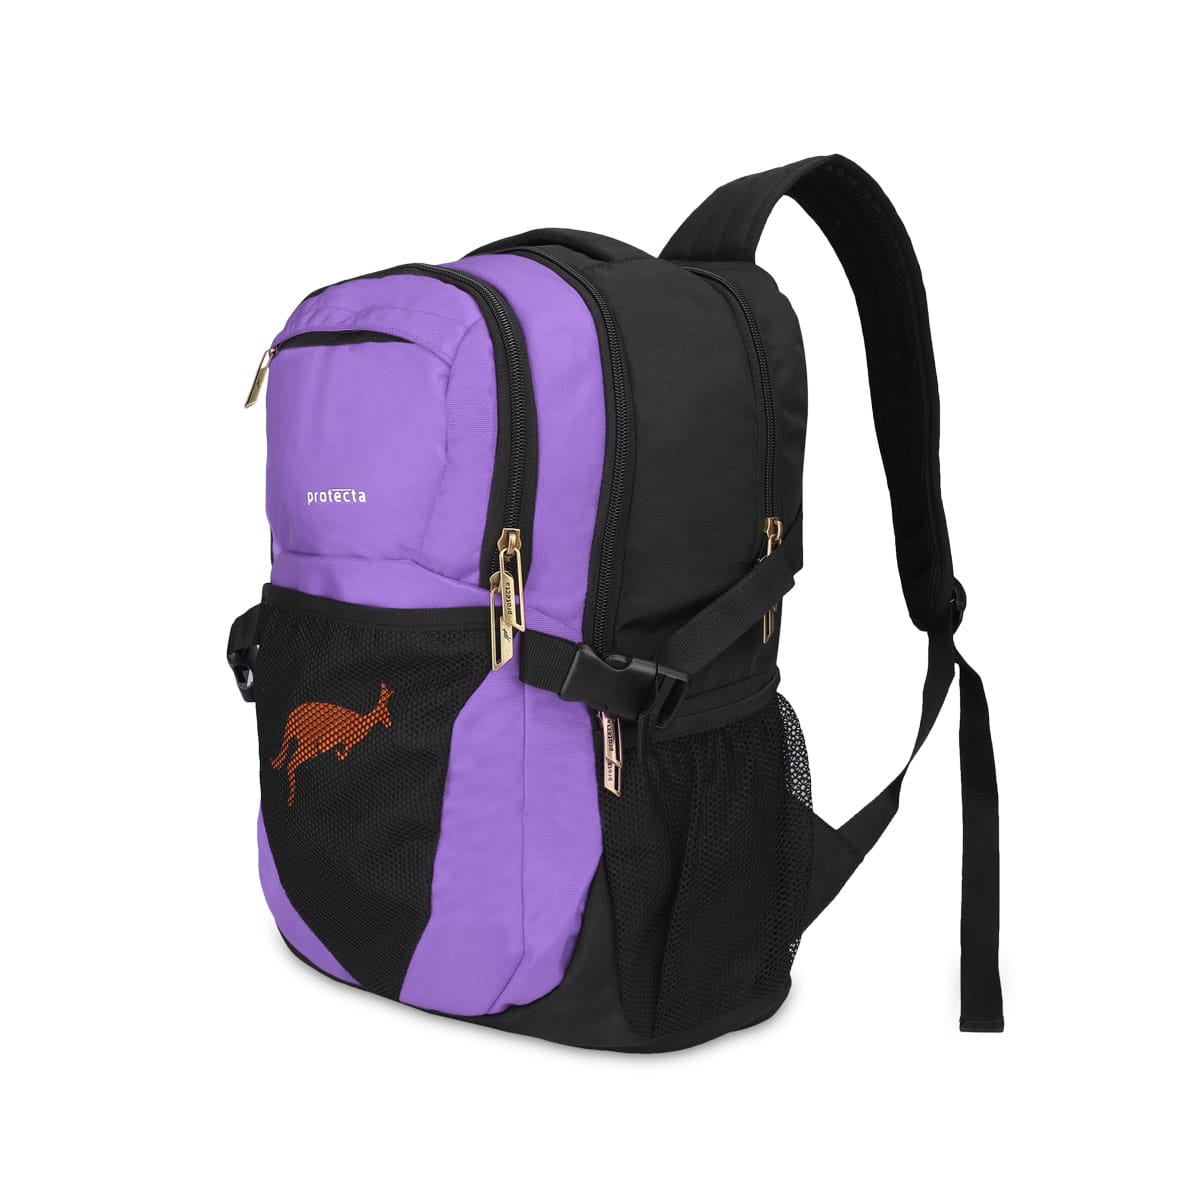 Black-Violet | Protecta Enigma Laptop Backpack-Main